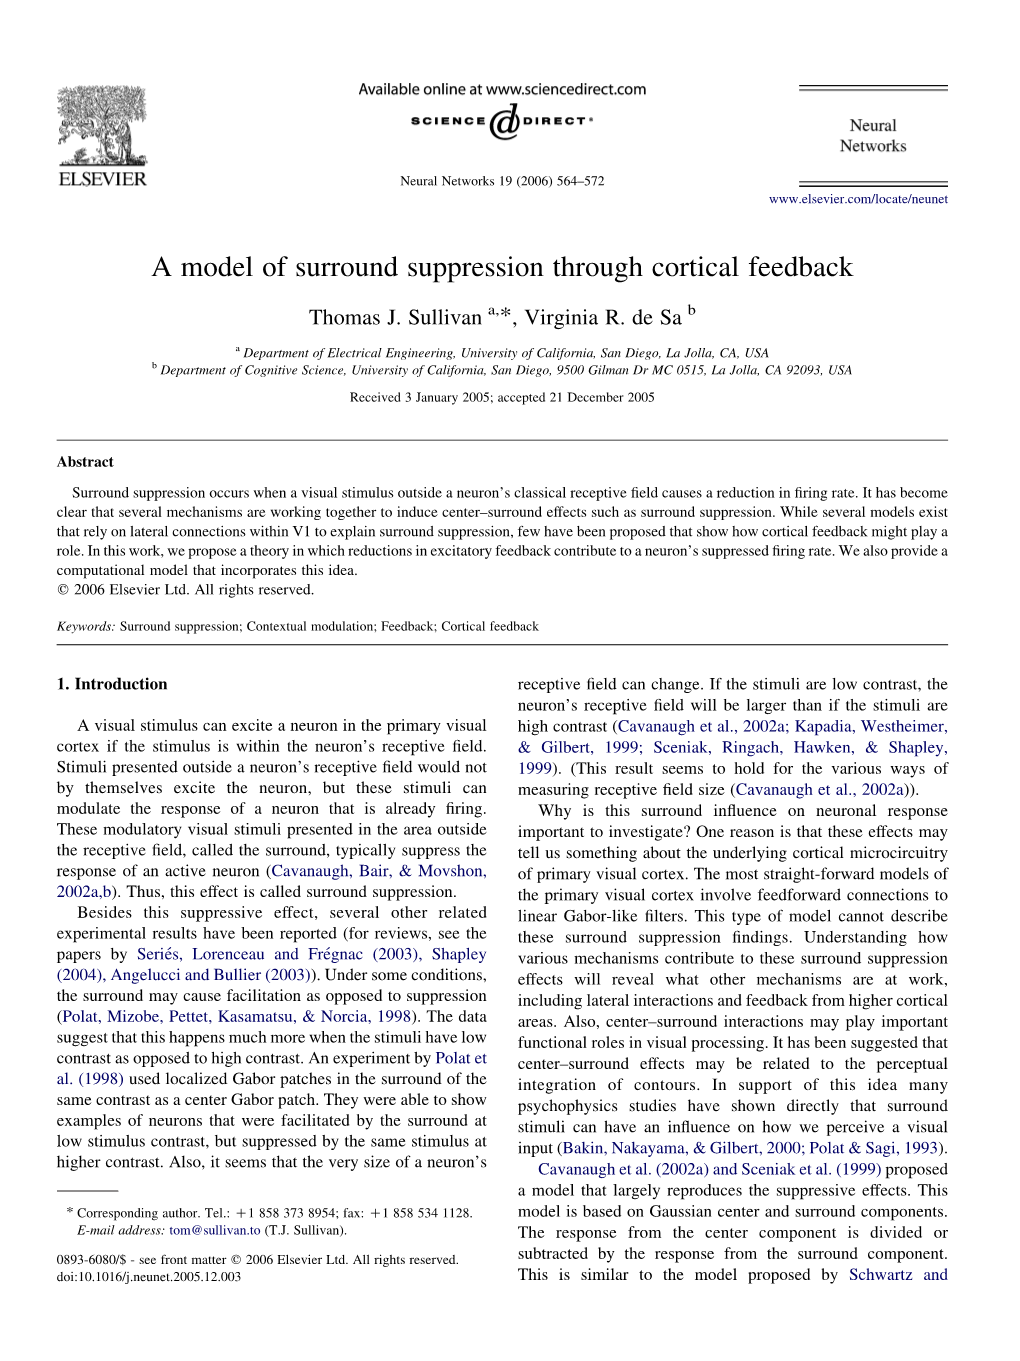 A Model of Surround Suppression Through Cortical Feedback